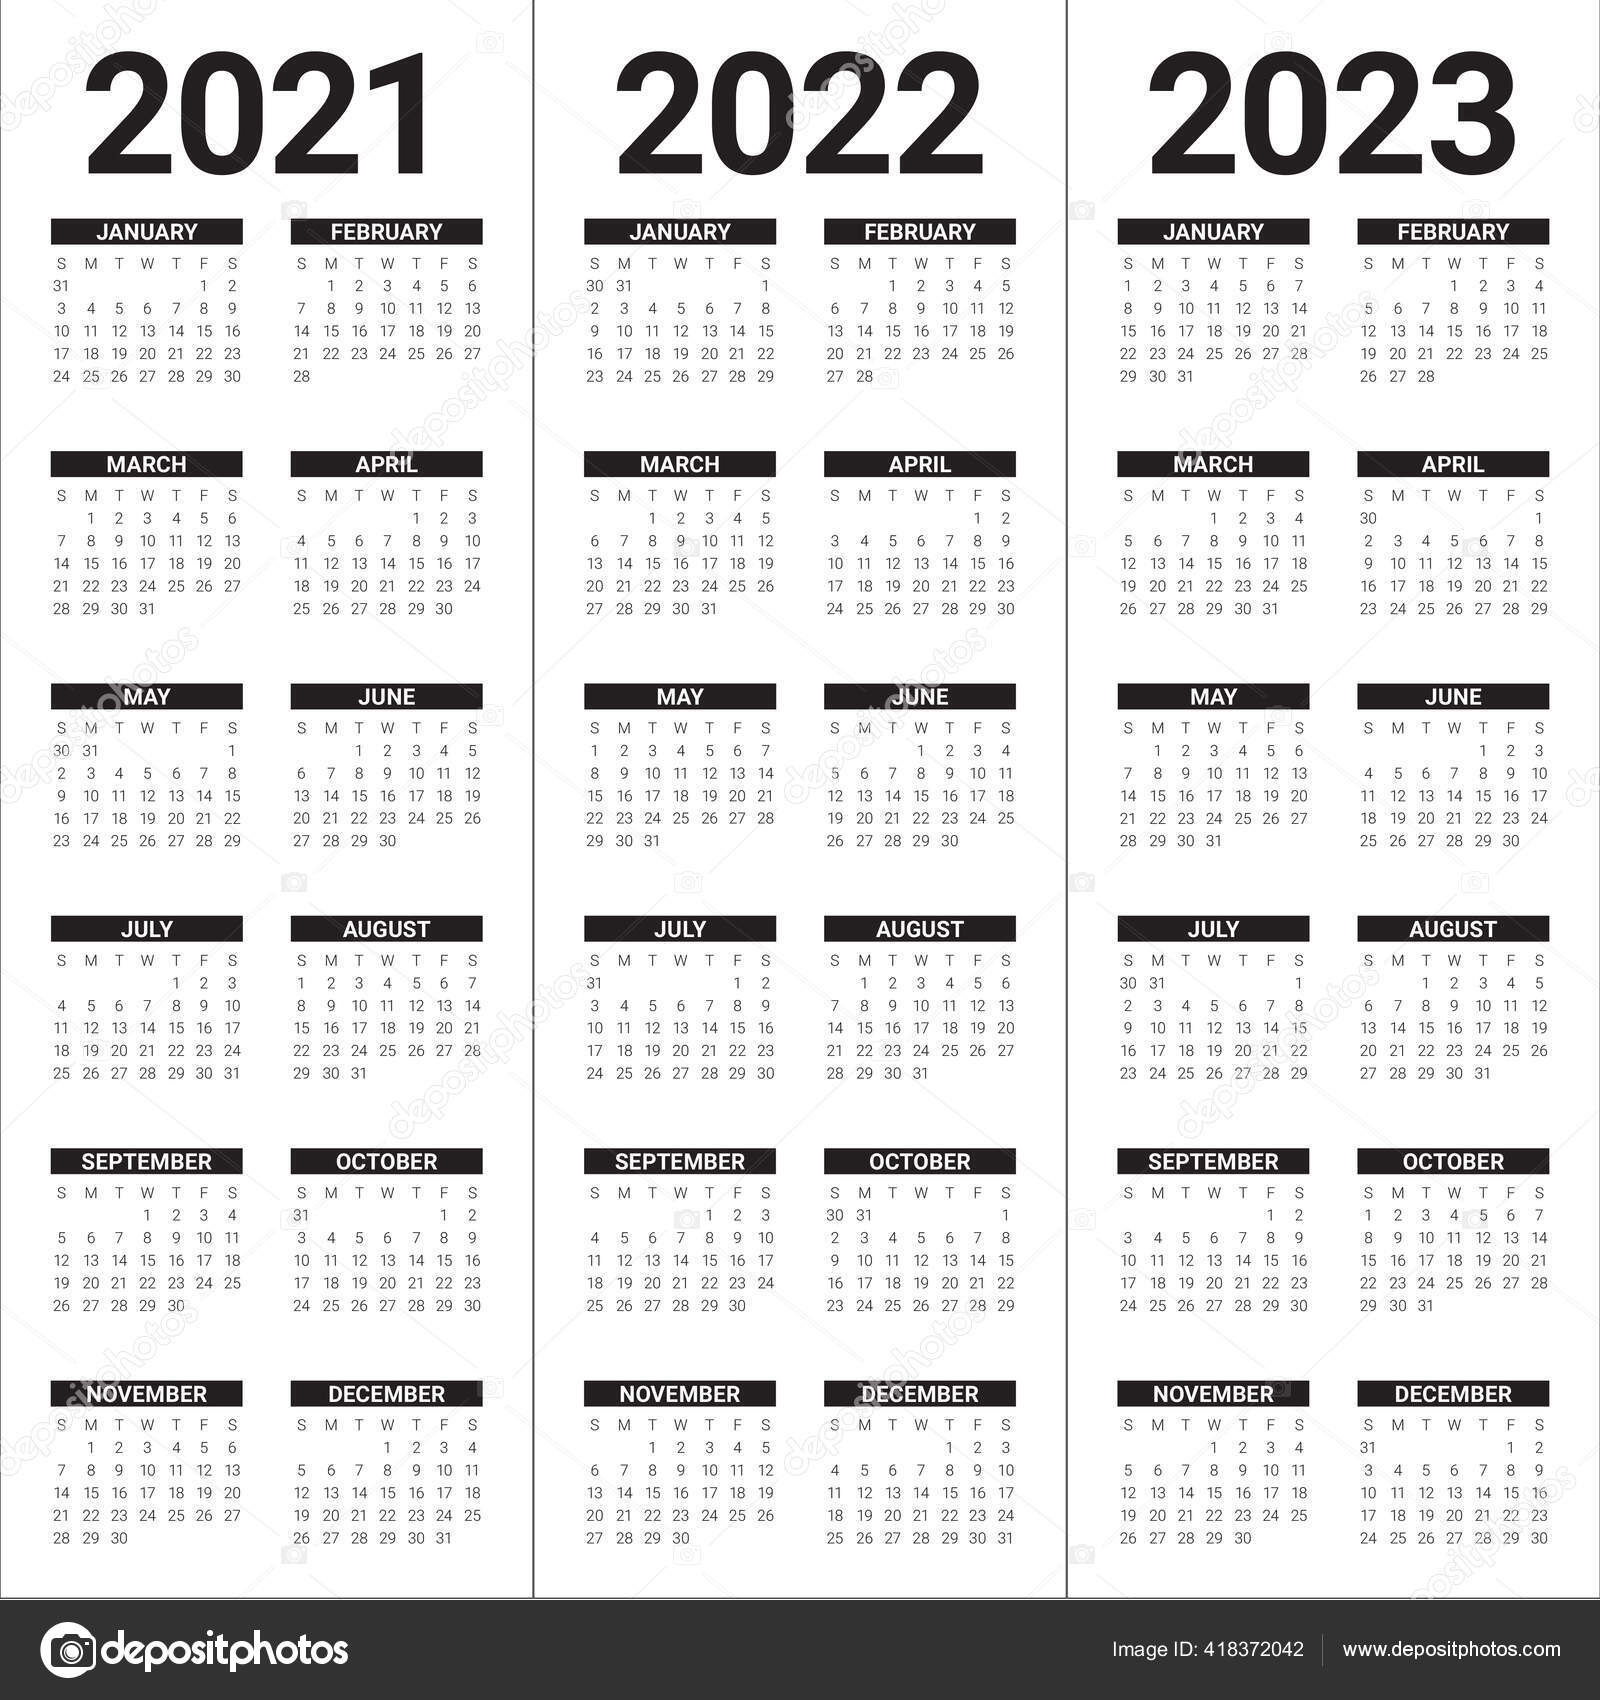 Ucsc 2022 2023 Calendar Year 2021 2022 2023 Calendar Vector Design Template Simple Clean Stock  Vector Image By ©Dolphfynlow #418372042